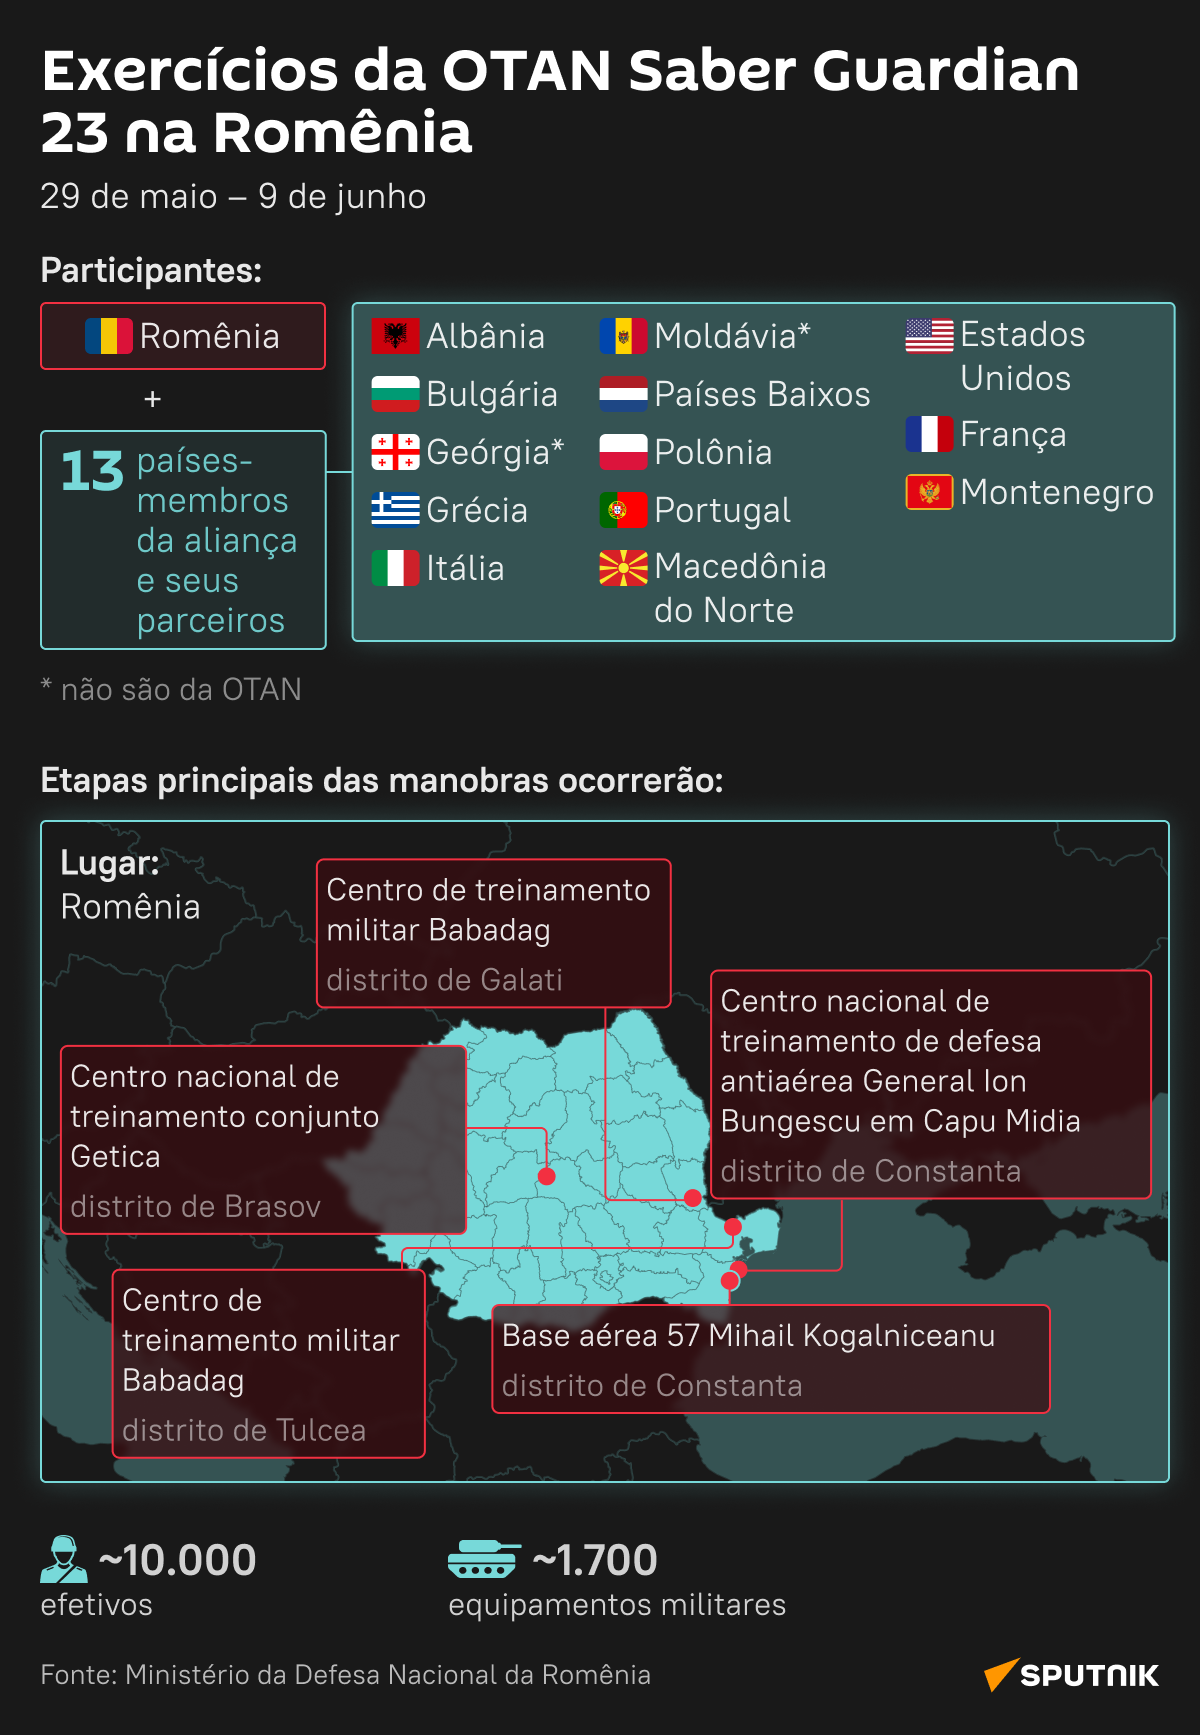 Saber Guardian 23, grandes manobras internacionais da OTAN na Romênia - Sputnik Brasil